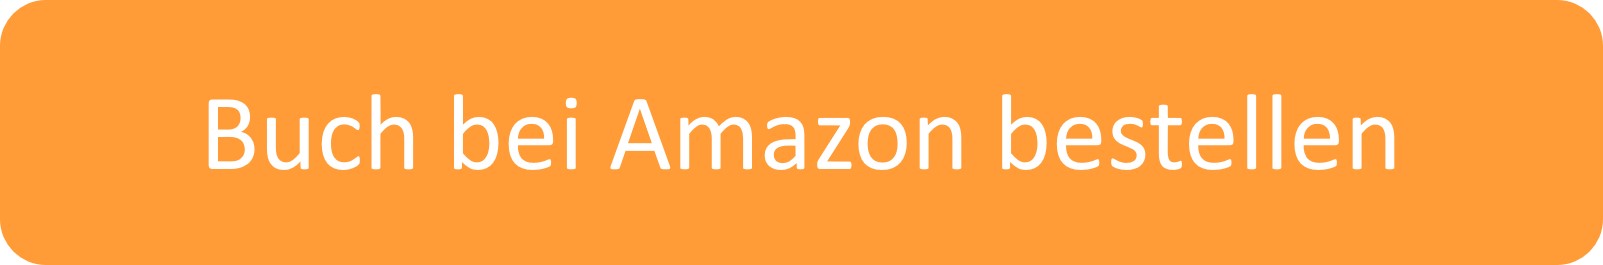 Buch bei Amazon bestellen.png